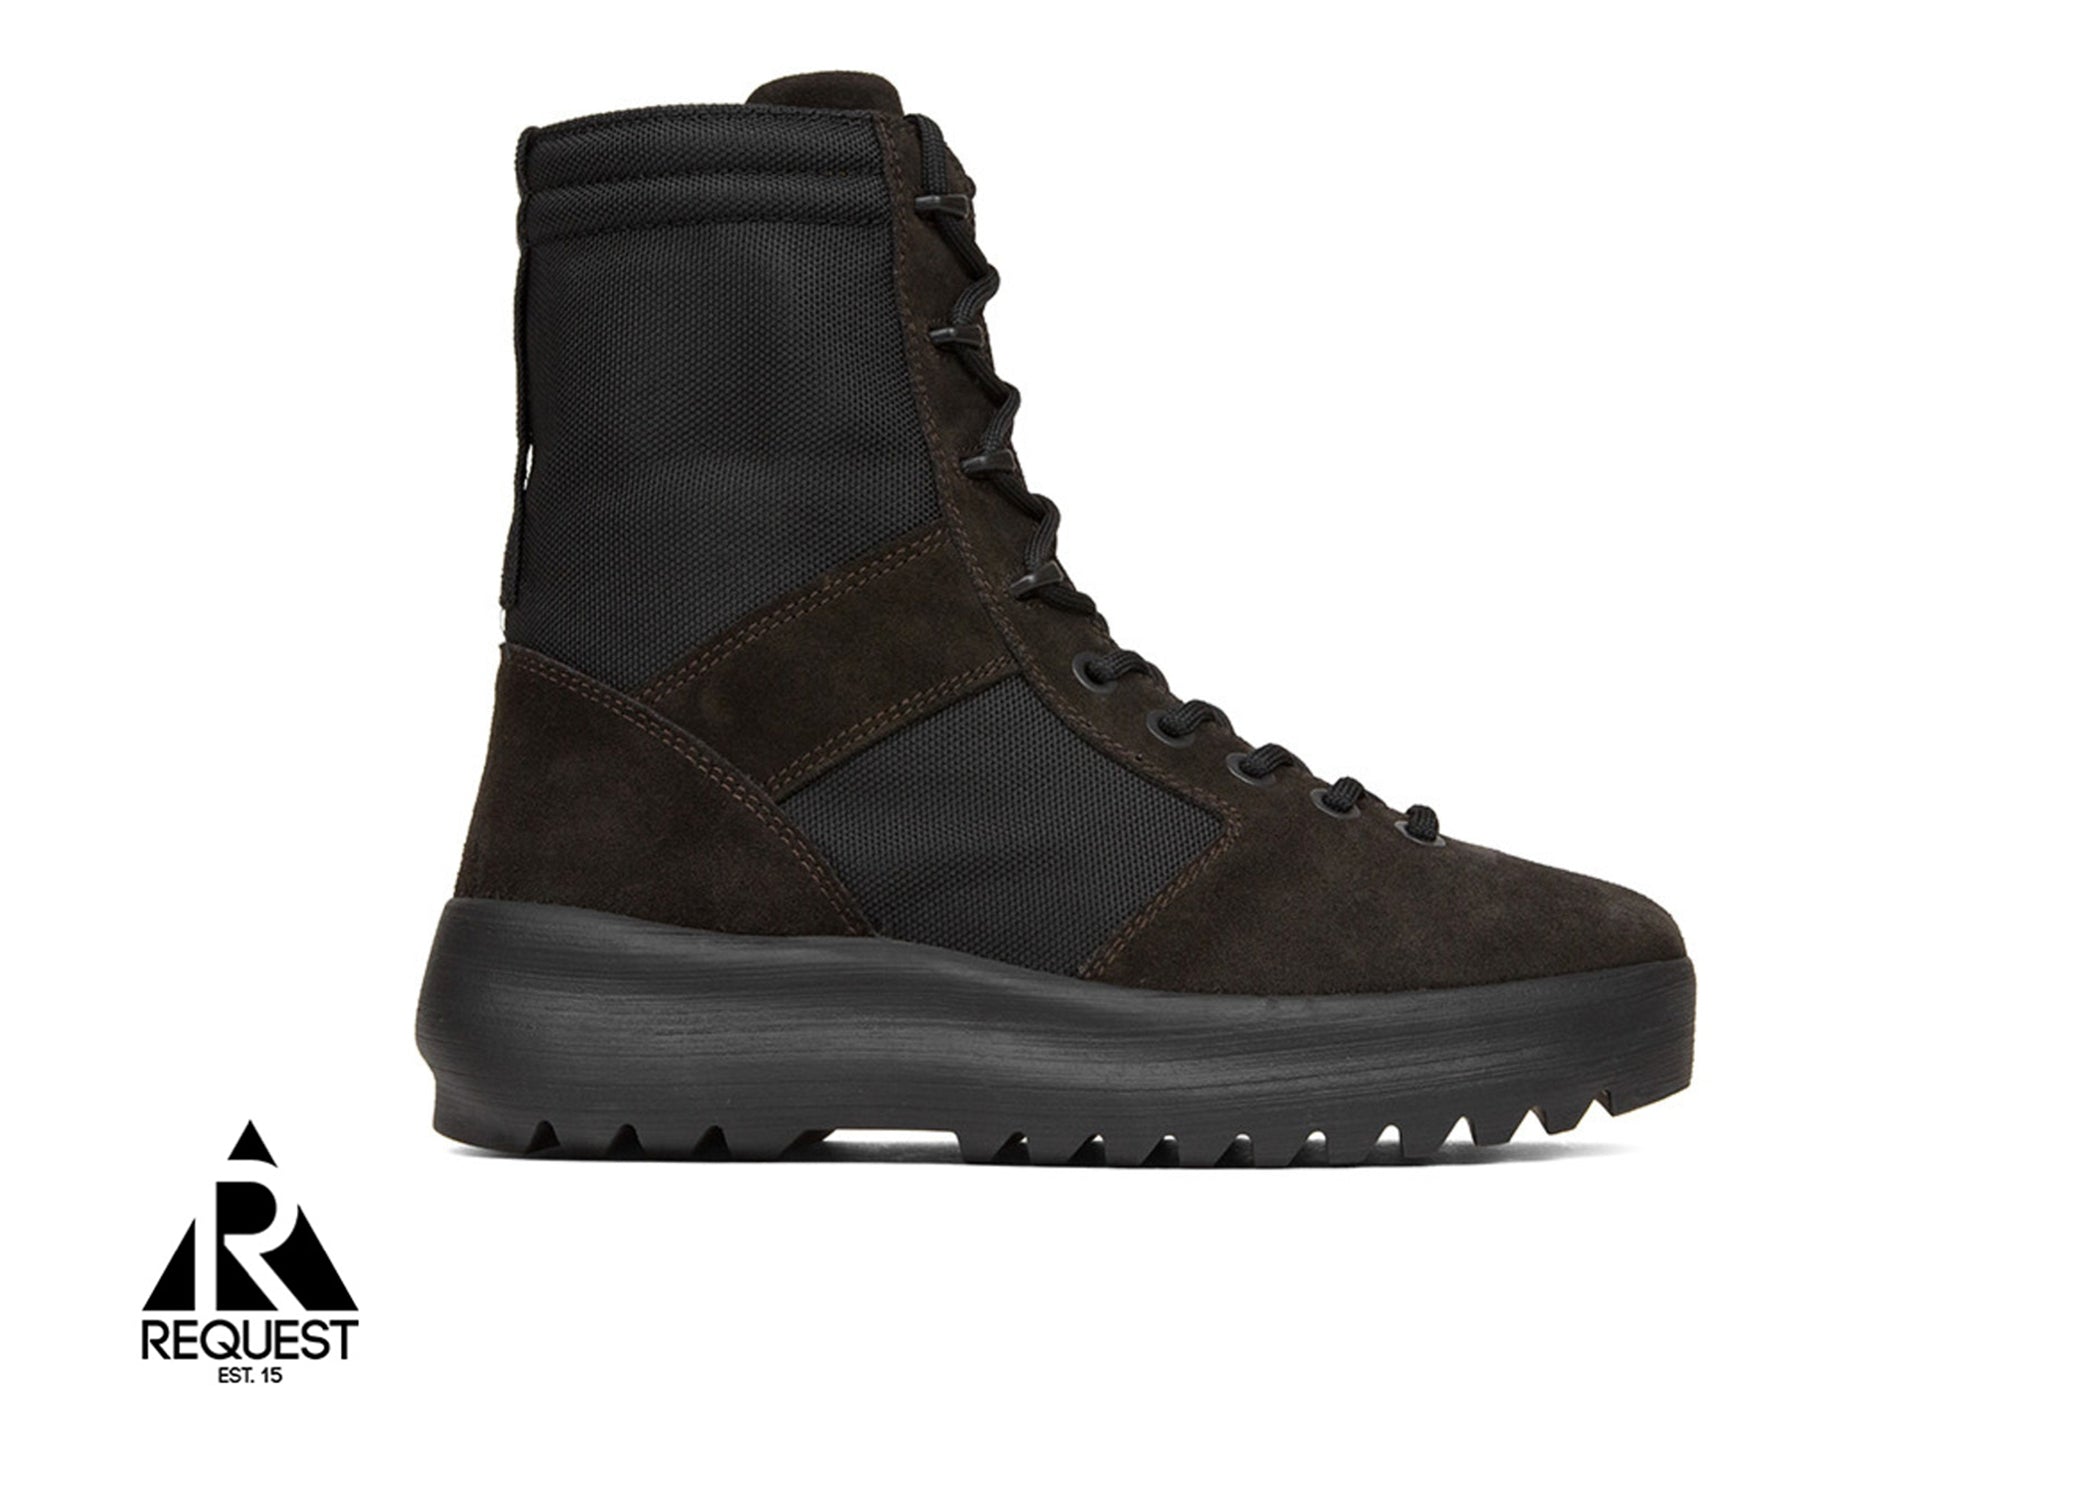 Yeezy Military Boot “Onyx Shade”